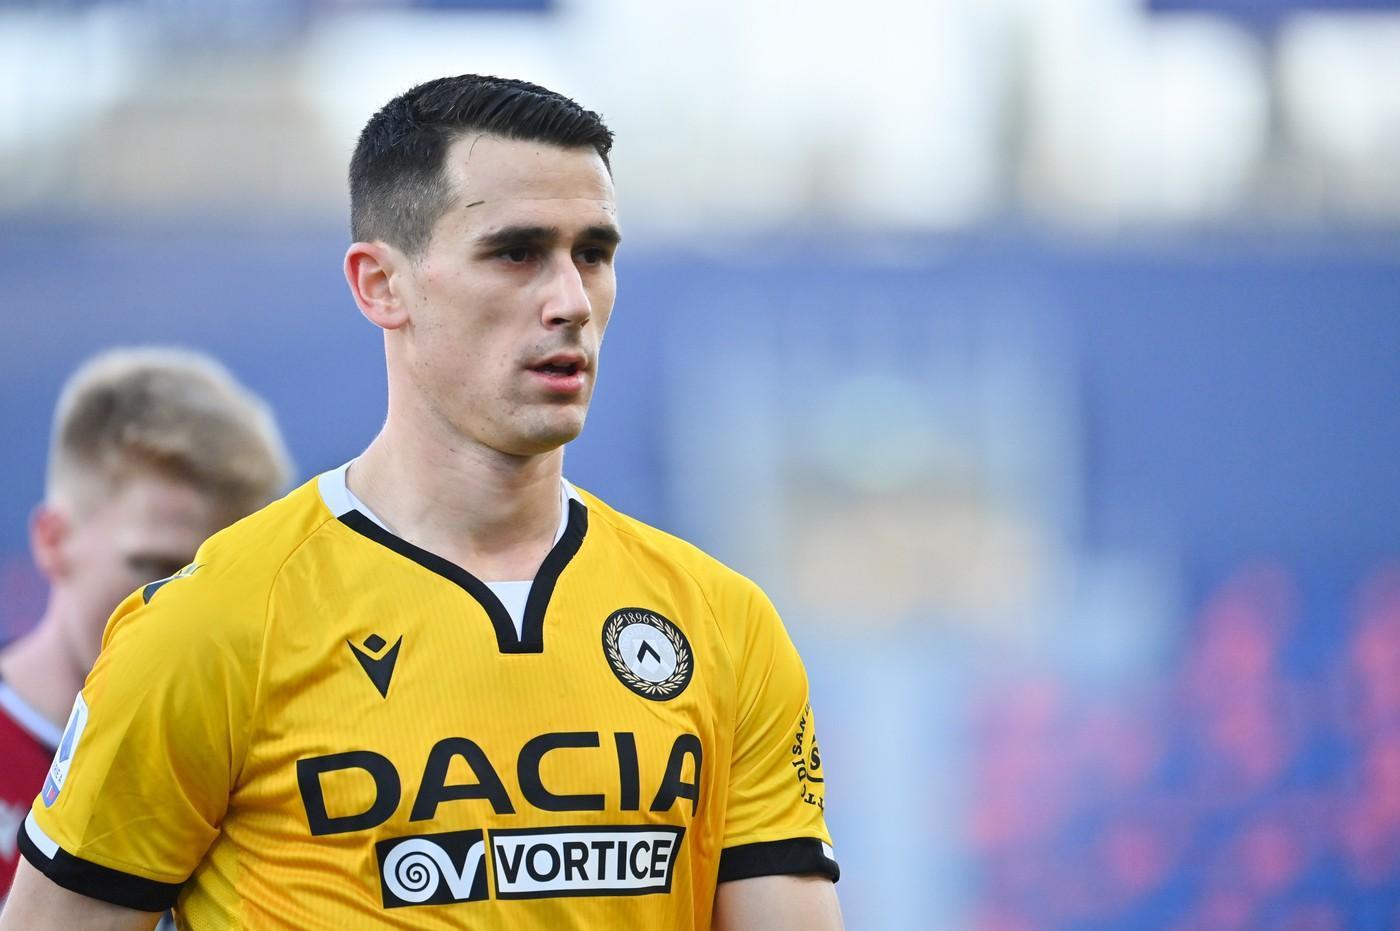 Ufficiale - Lasagna è un calciatore del Verona